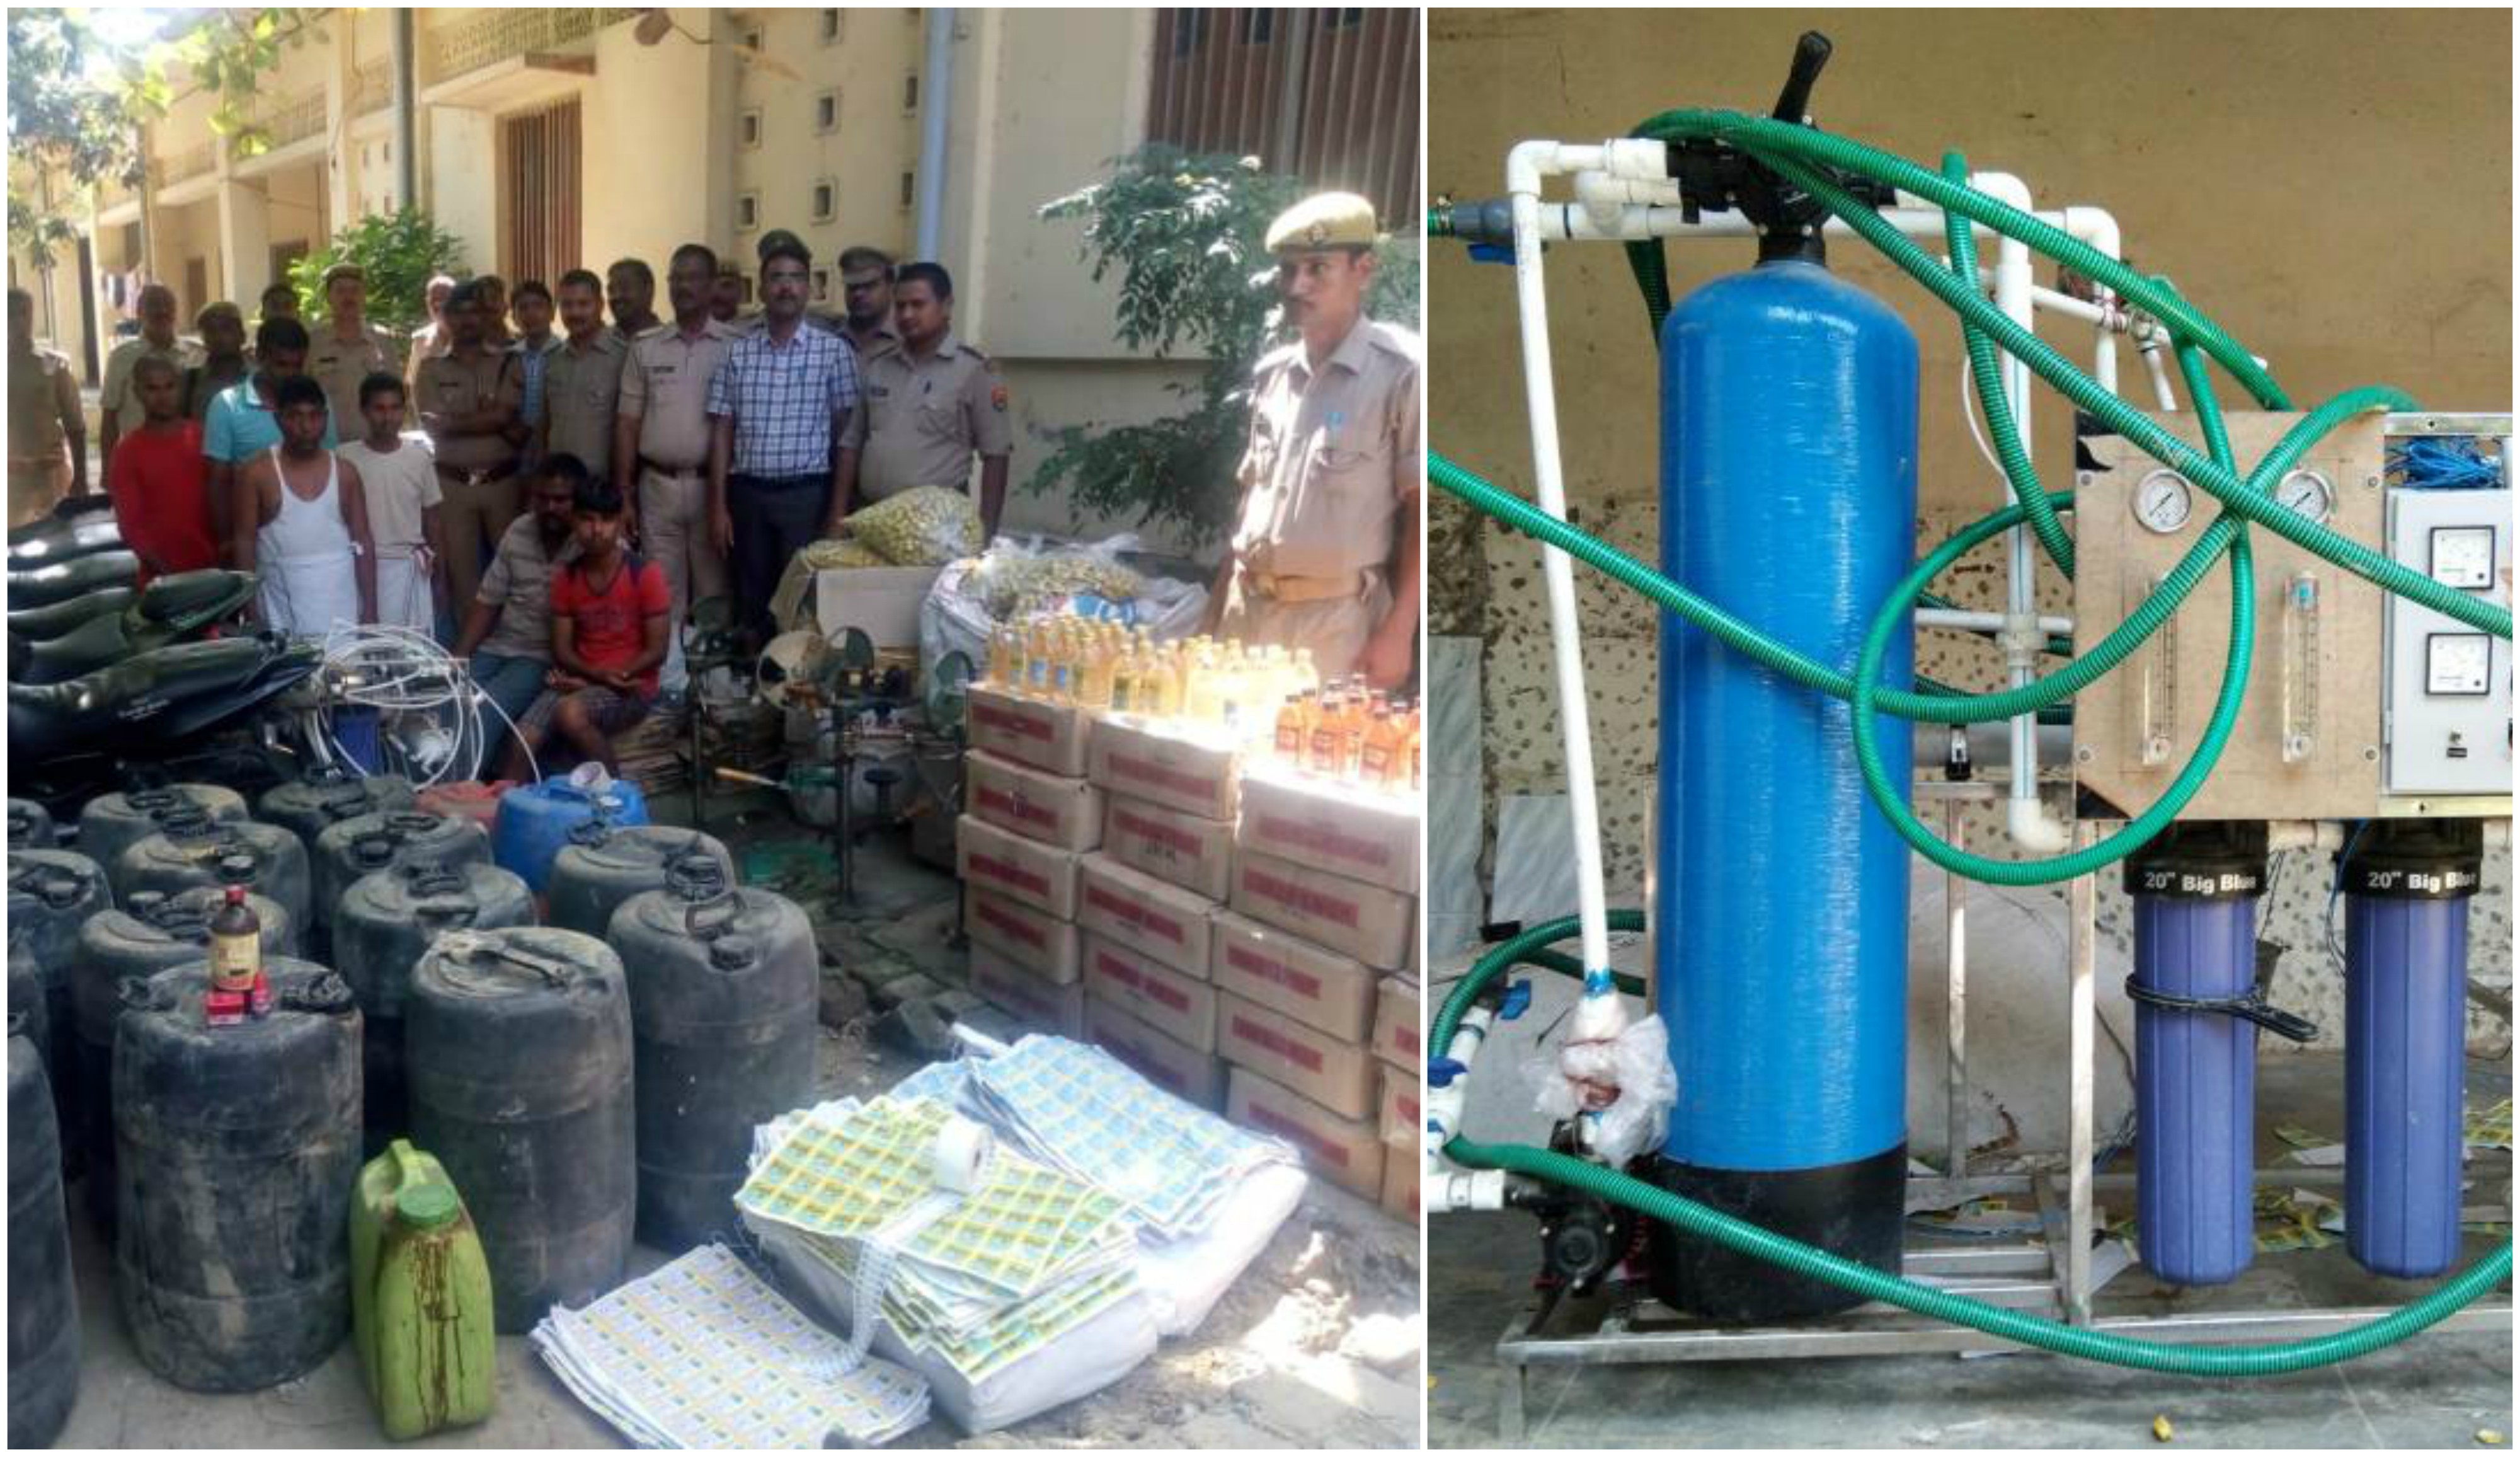 Police raid ITI college found liquor and preparing products